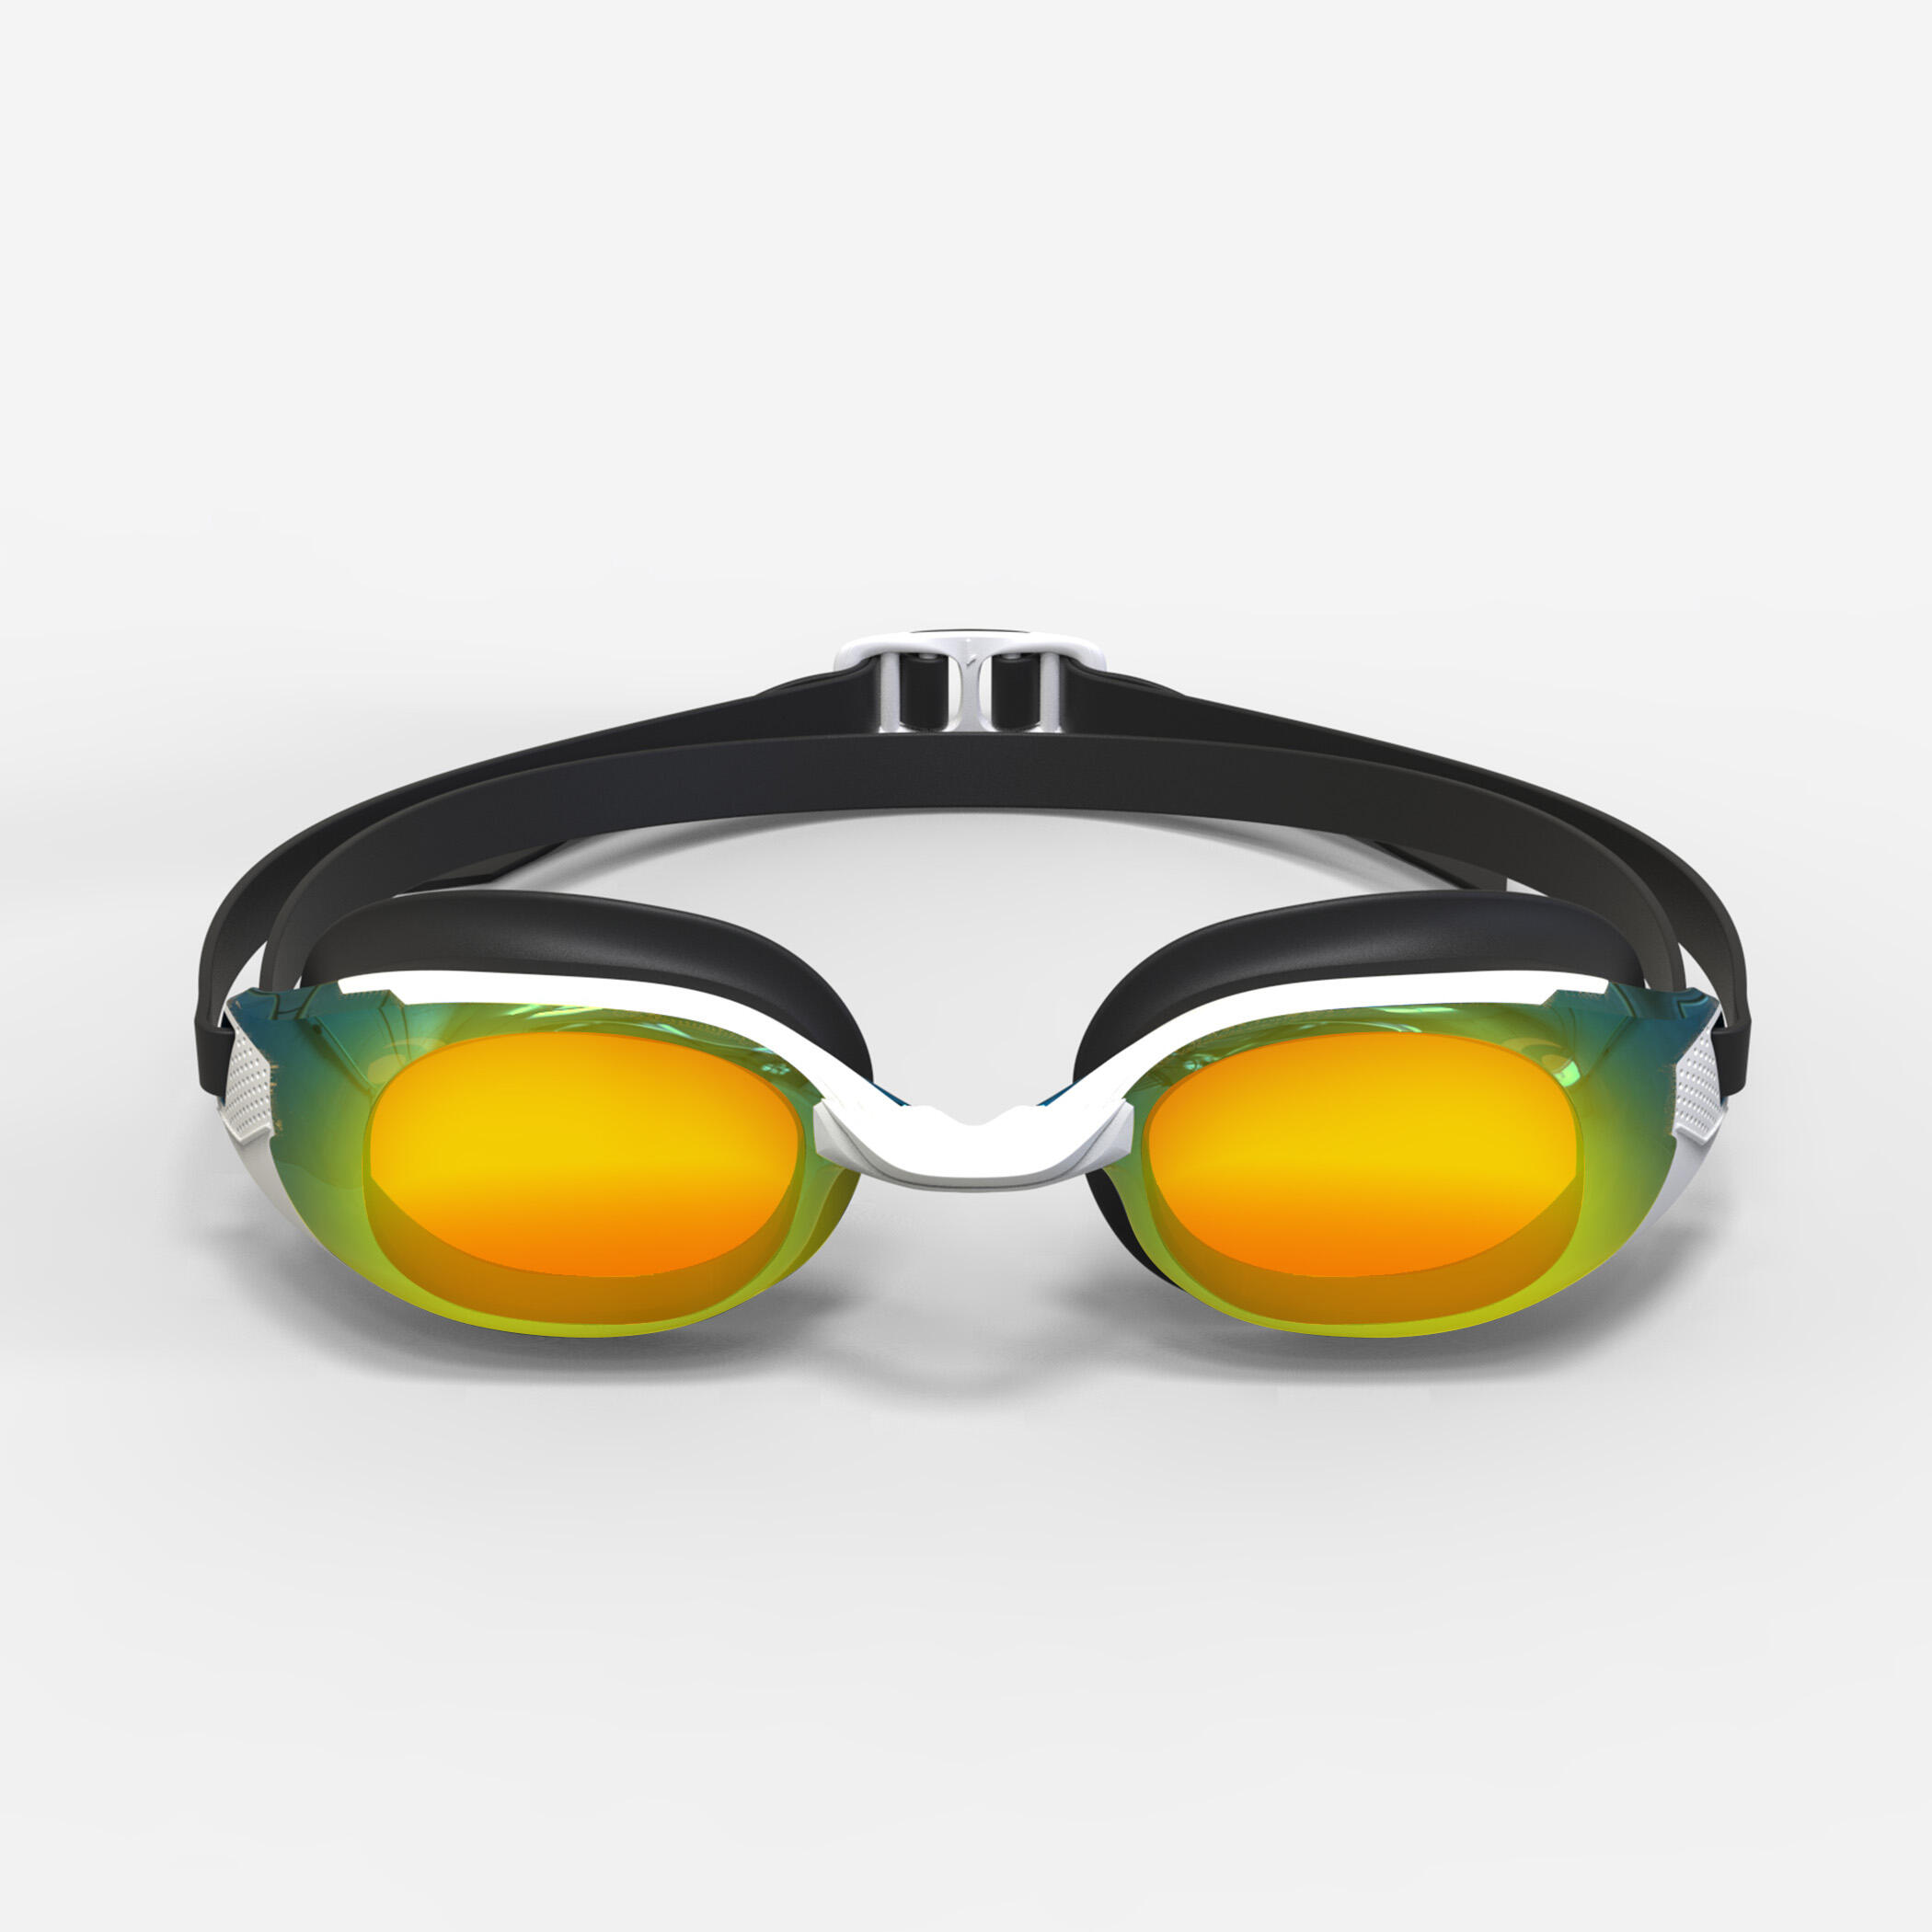 Swimming goggles BFIT - Mirrored lenses - One size - Black orange 3/5